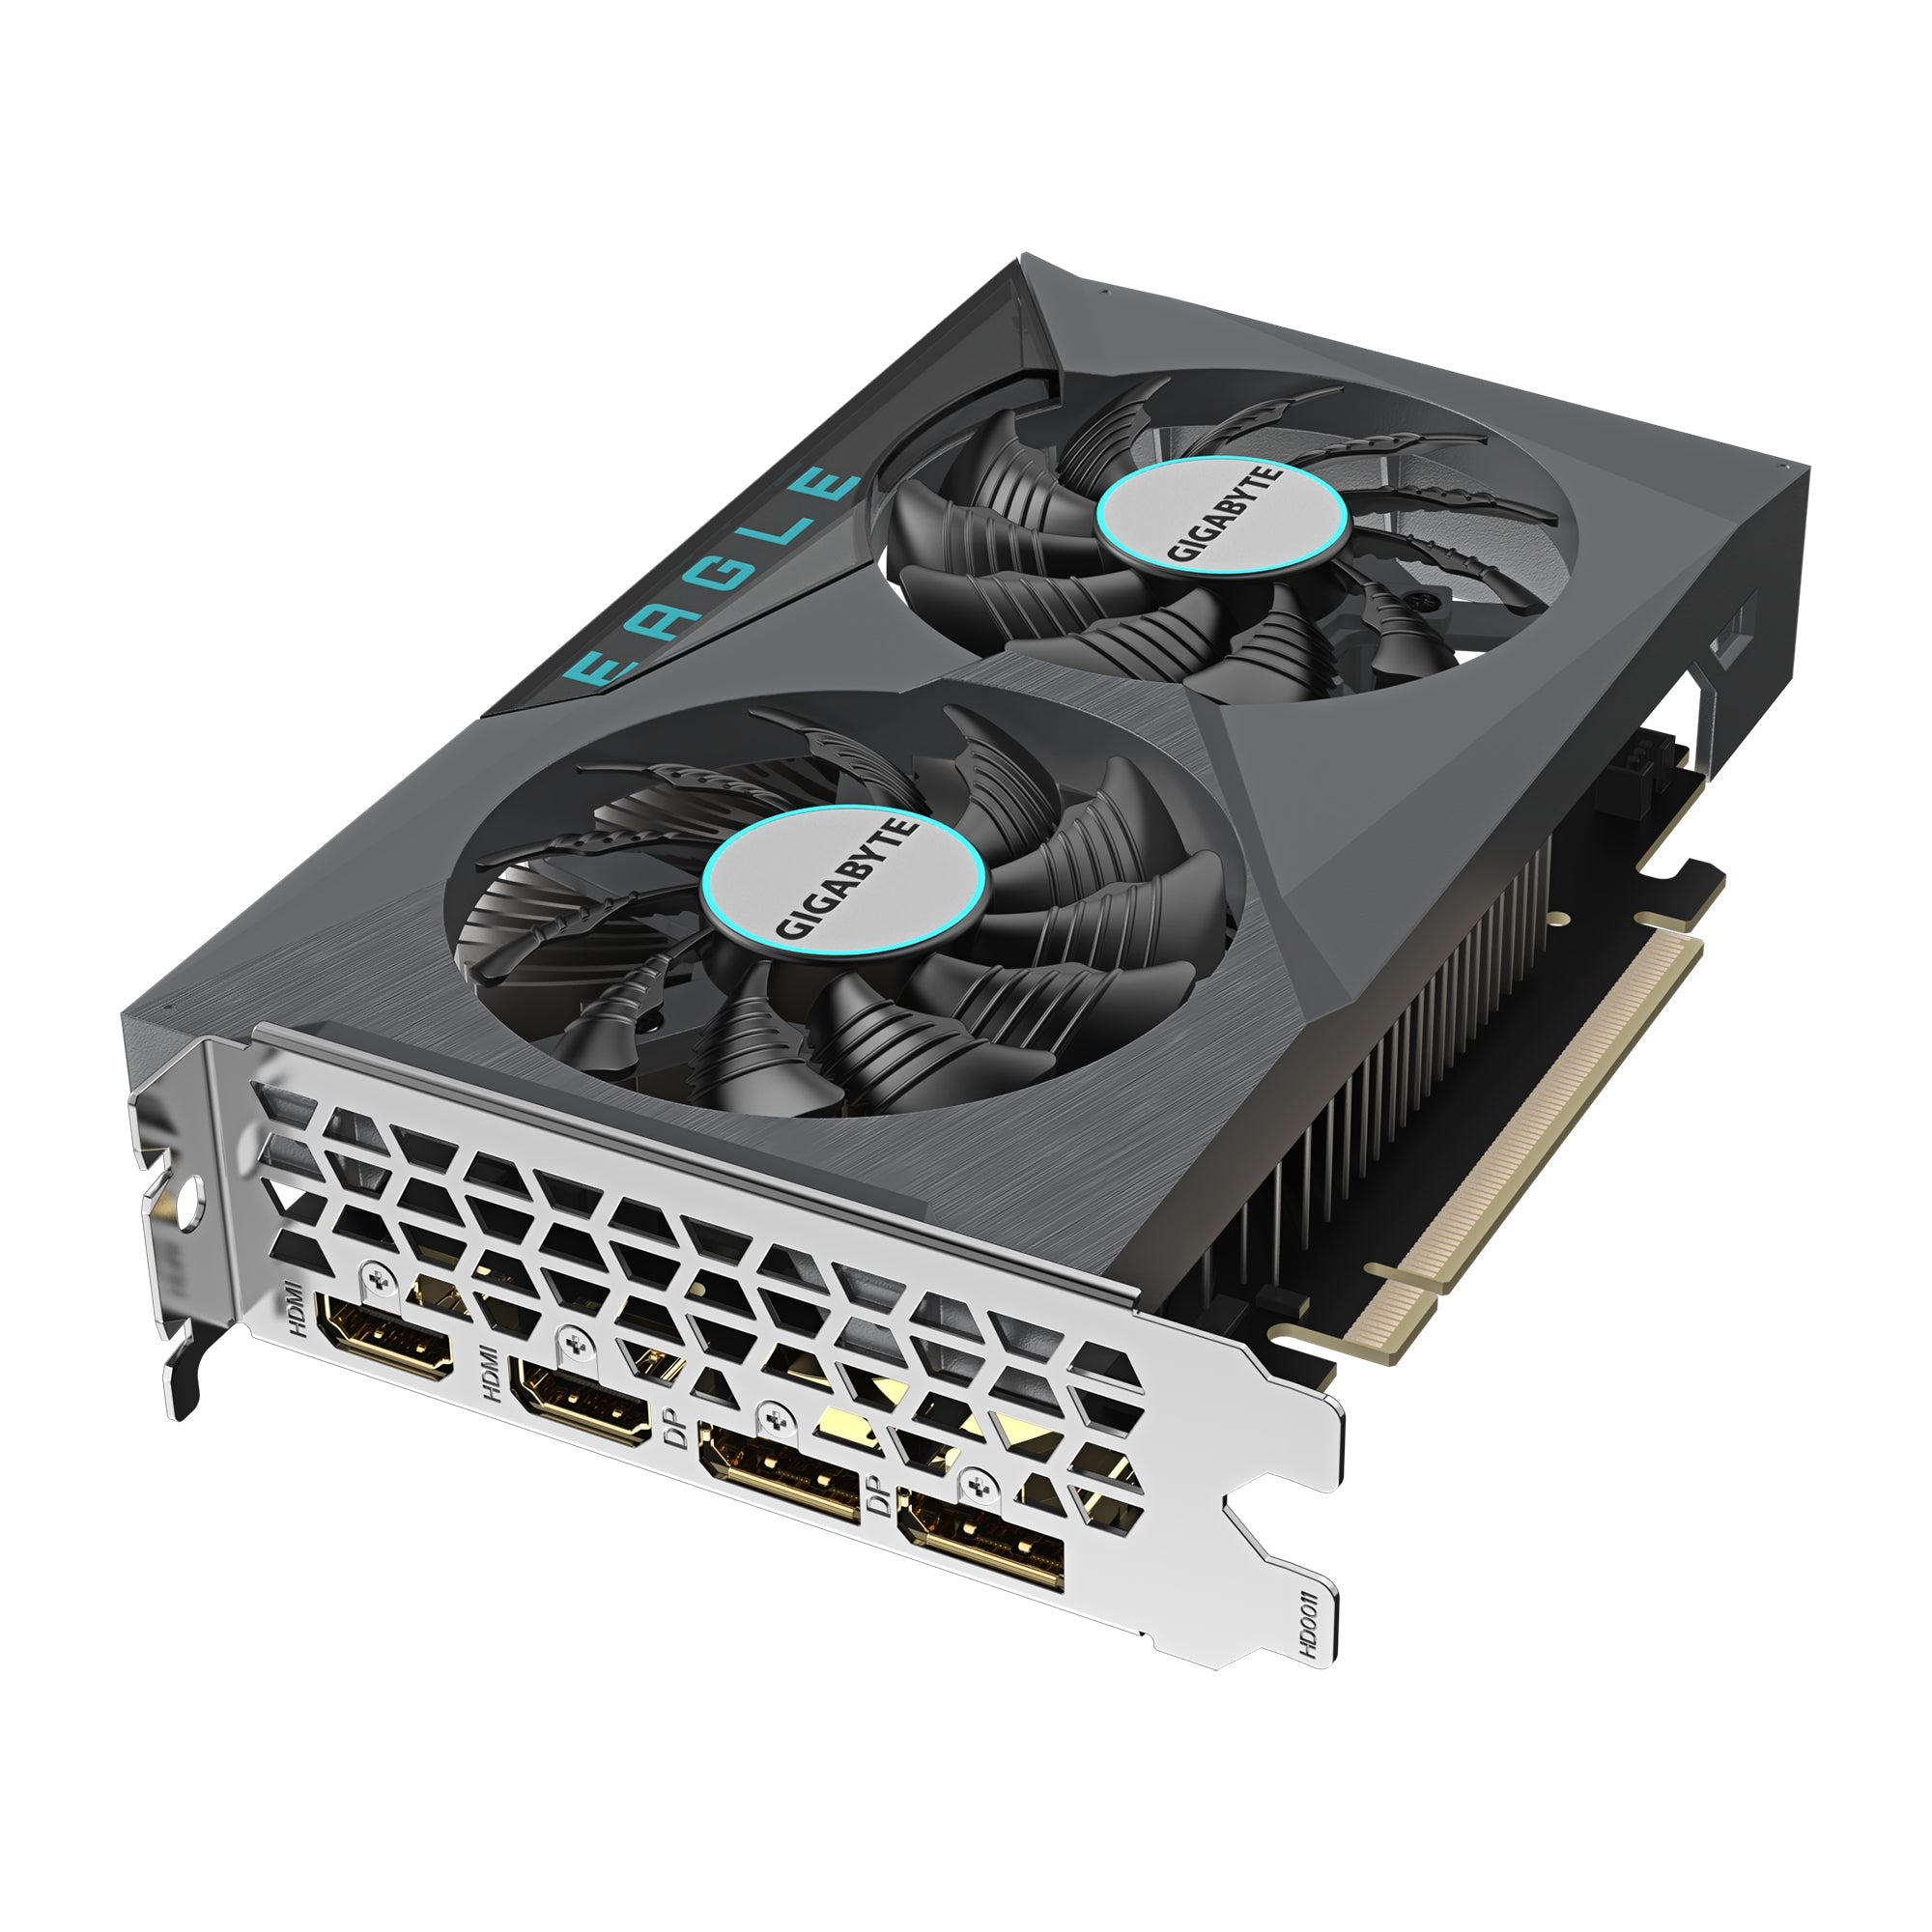 Gigabyte GeForce RTX 3050 OC Eagle 6G